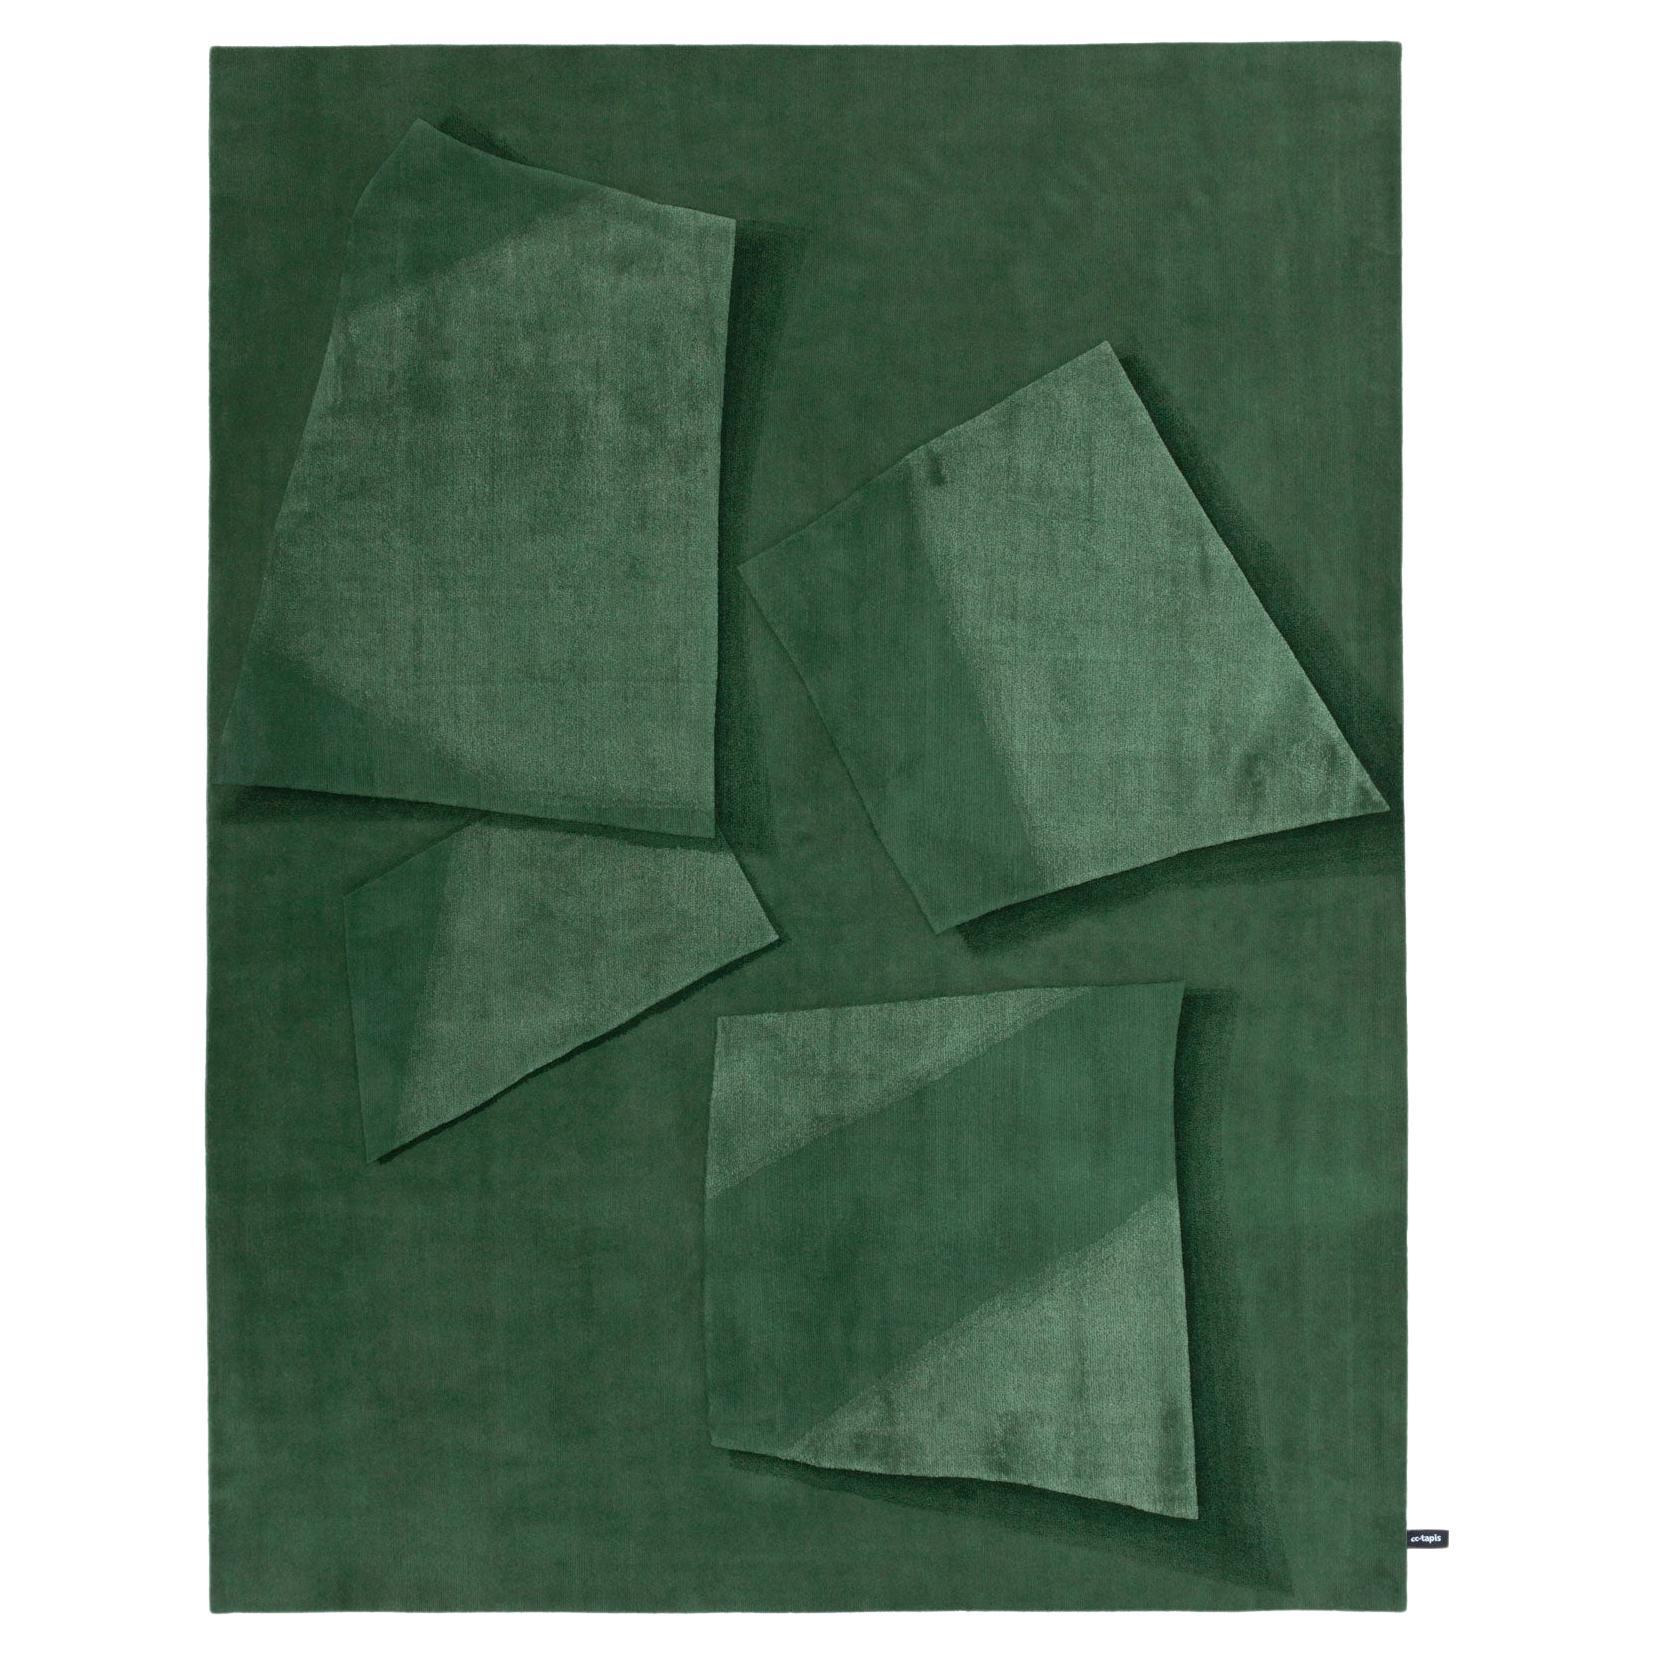 cc-tapis Ombra Rug in Green by Muller Van Severen For Sale